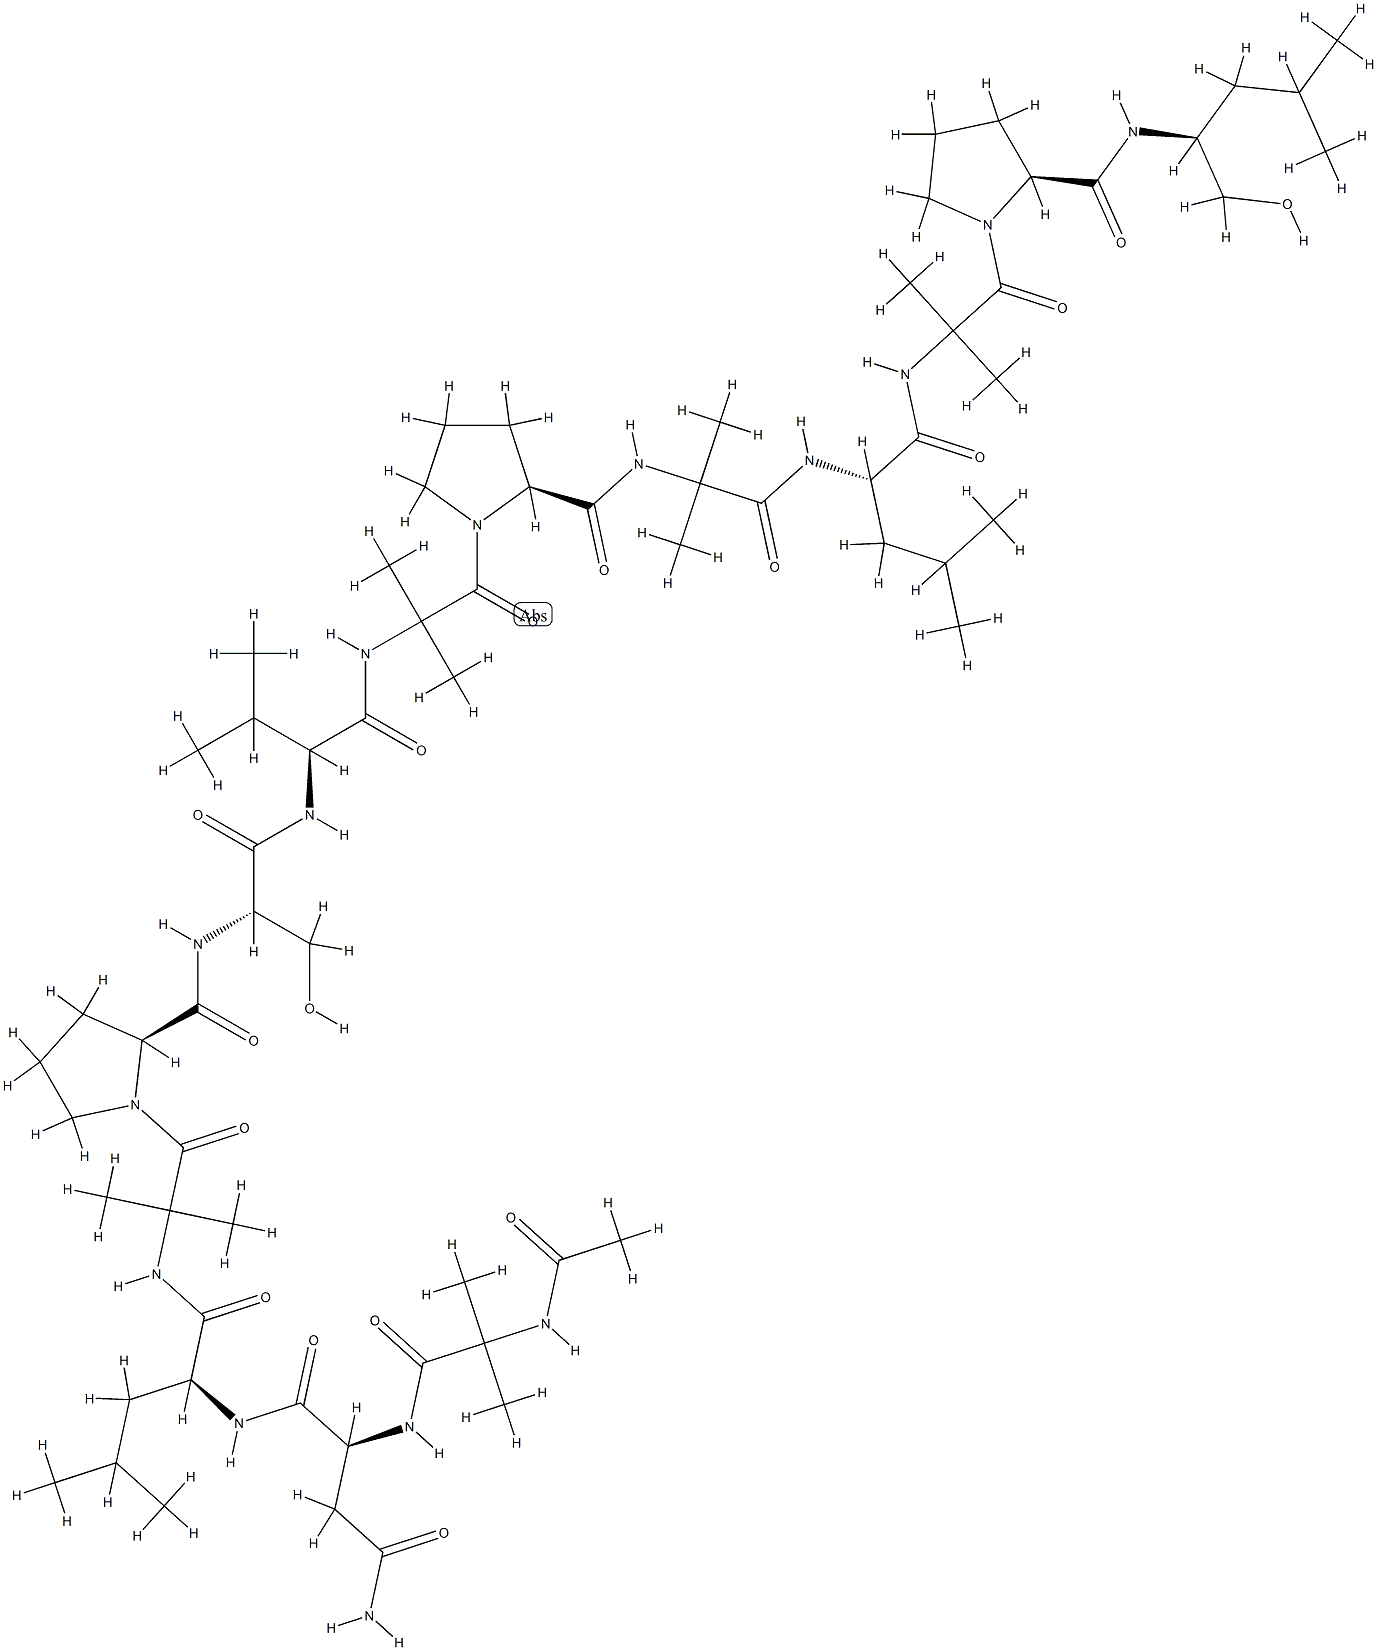 (2S)-2-[(2-acetamido-2-methyl-propanoyl)amino]-N-[(1S)-1-[[1-[(2S)-2-[ [(1S)-2-hydroxy-1-[[(1S)-1-[[1-[(2S)-2-[2-[[(1S)-1-[[1-[(2S)-2-[[(2S)- 1-hydroxy-4-methyl-pentan-2-yl]carbamoyl]pyrrolidin-1-yl]-2-methyl-1-o xo-propan-2-yl]carbamoyl]-3-methyl-butyl]carbamoyl]propan-2-ylcarbamoy l]pyrrolidin-1-yl]-2-methyl-1-oxo-propan-2-yl]carbamoyl]-2-methyl-prop yl]carbamoyl]ethyl]carbamoyl]pyrrolidin-1-yl]-2-methyl-1-oxo-propan-2- yl]carbamoyl]-3-methyl-butyl]butanediamide|